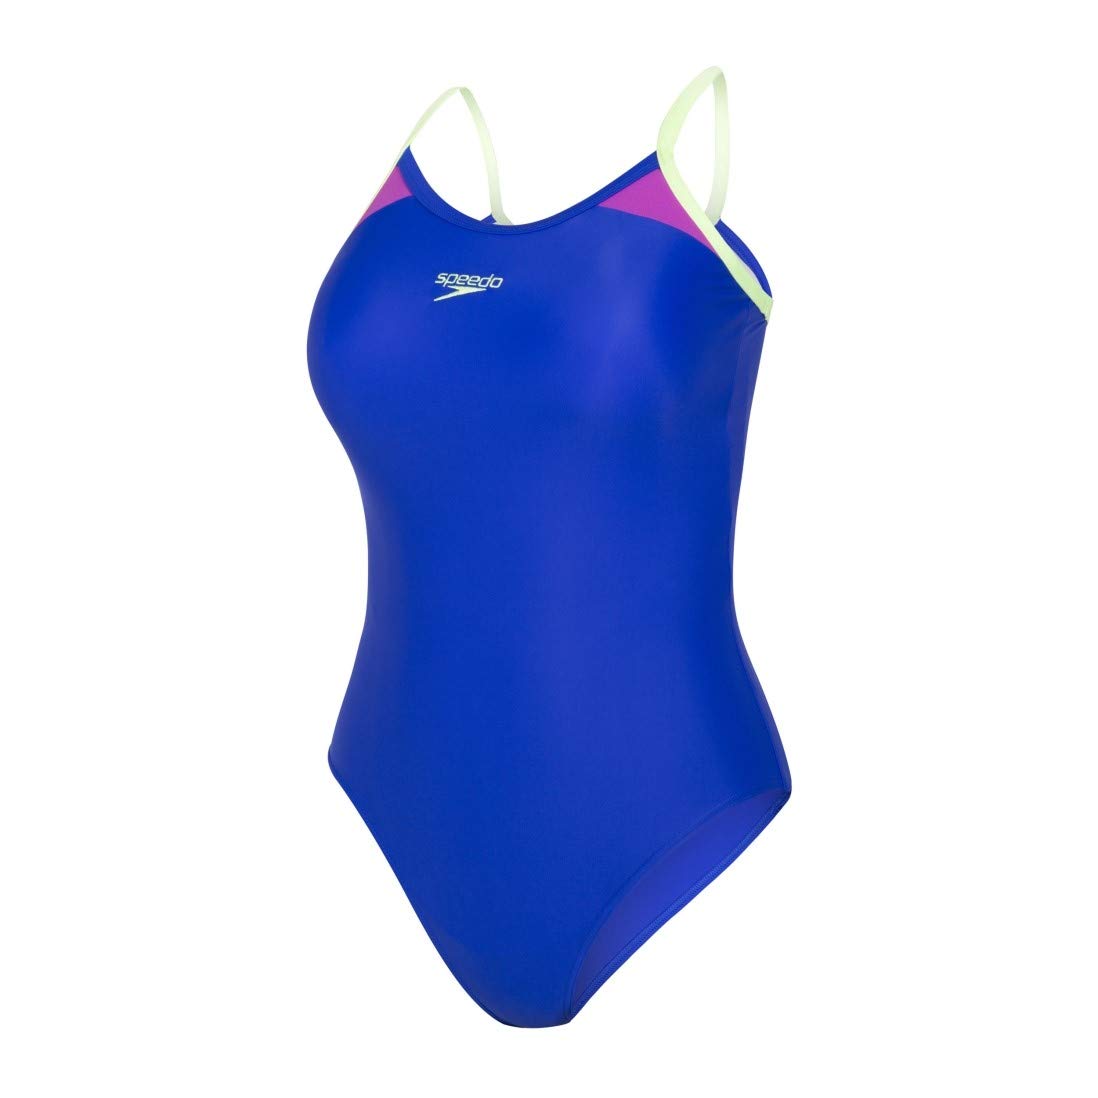 Speedo India 8FS837C777 Thin Strap Racerback Swimsuit (Chroma Blue/Bright Zest/Neon Orchid) - Best Price online Prokicksports.com